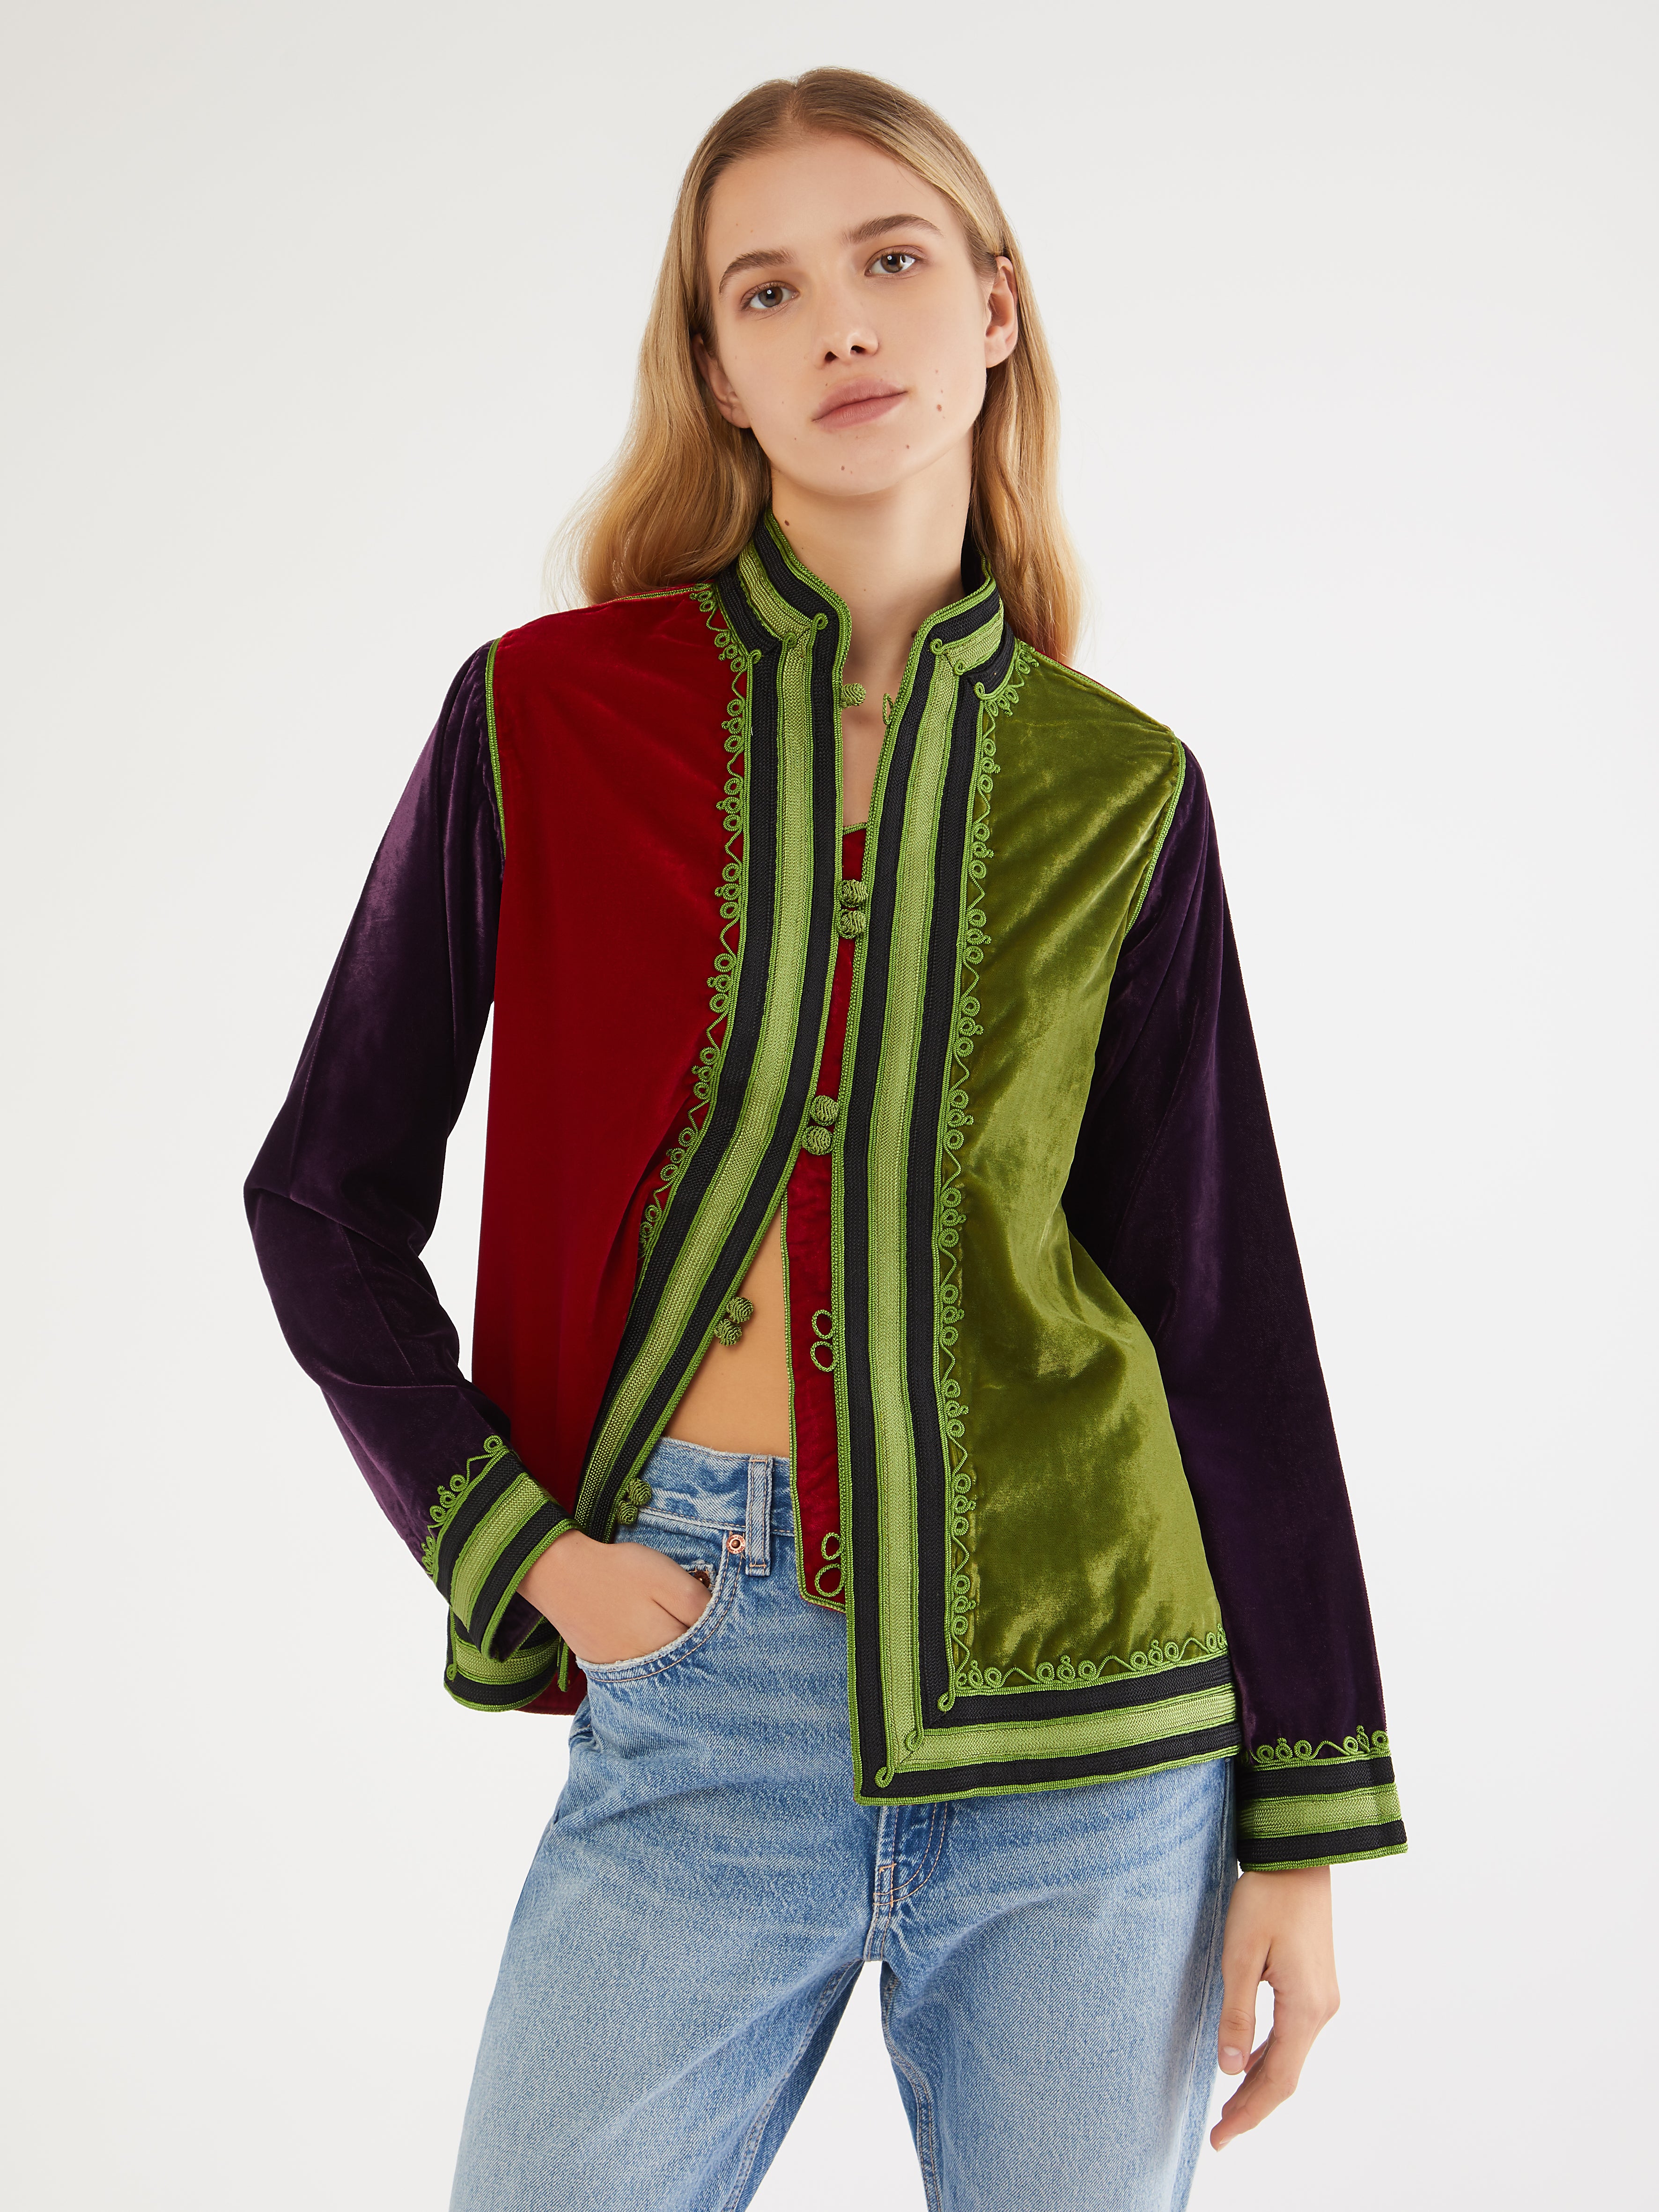 Moroccan velvet jacket